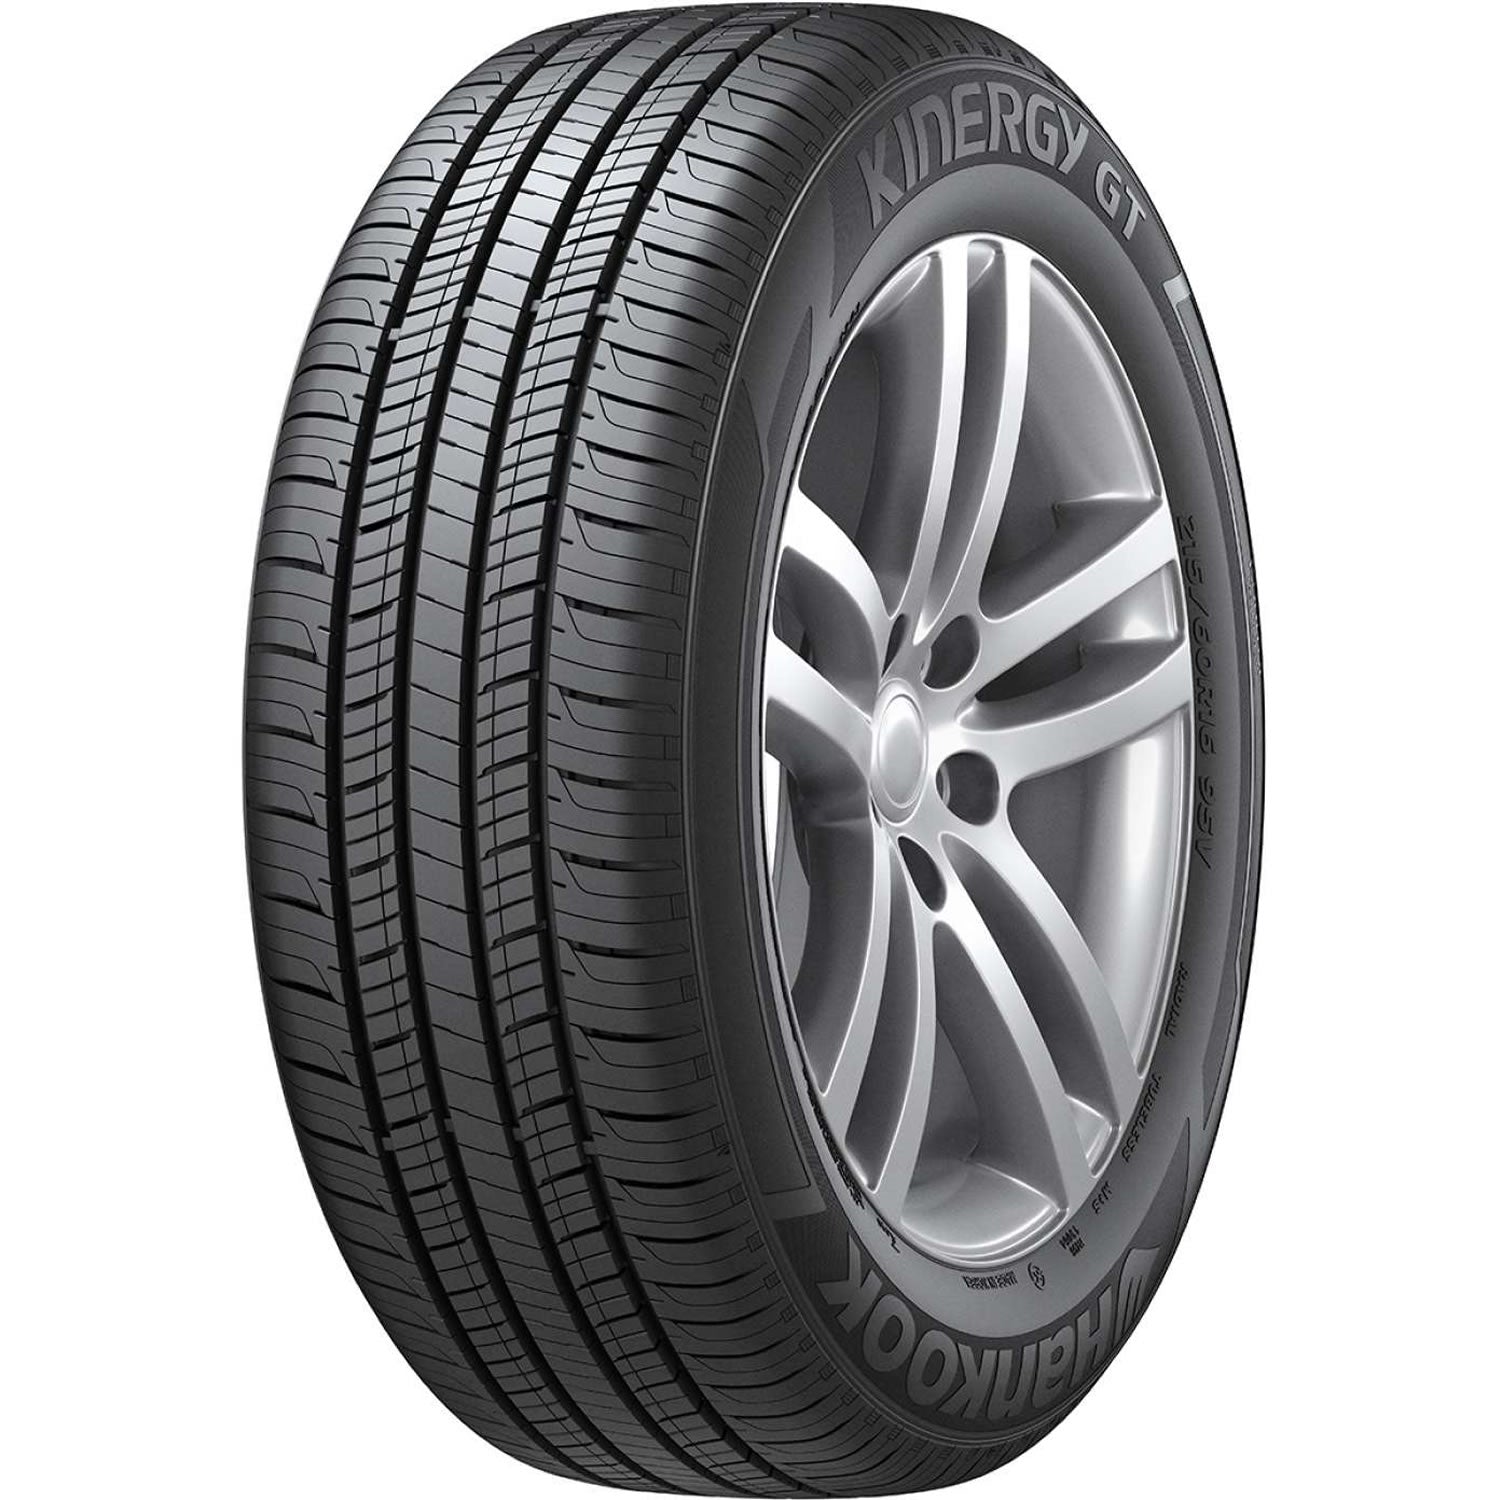 HANKOOK KINERGY GT 215/45R18 (25.6X8.5R 18) Tires